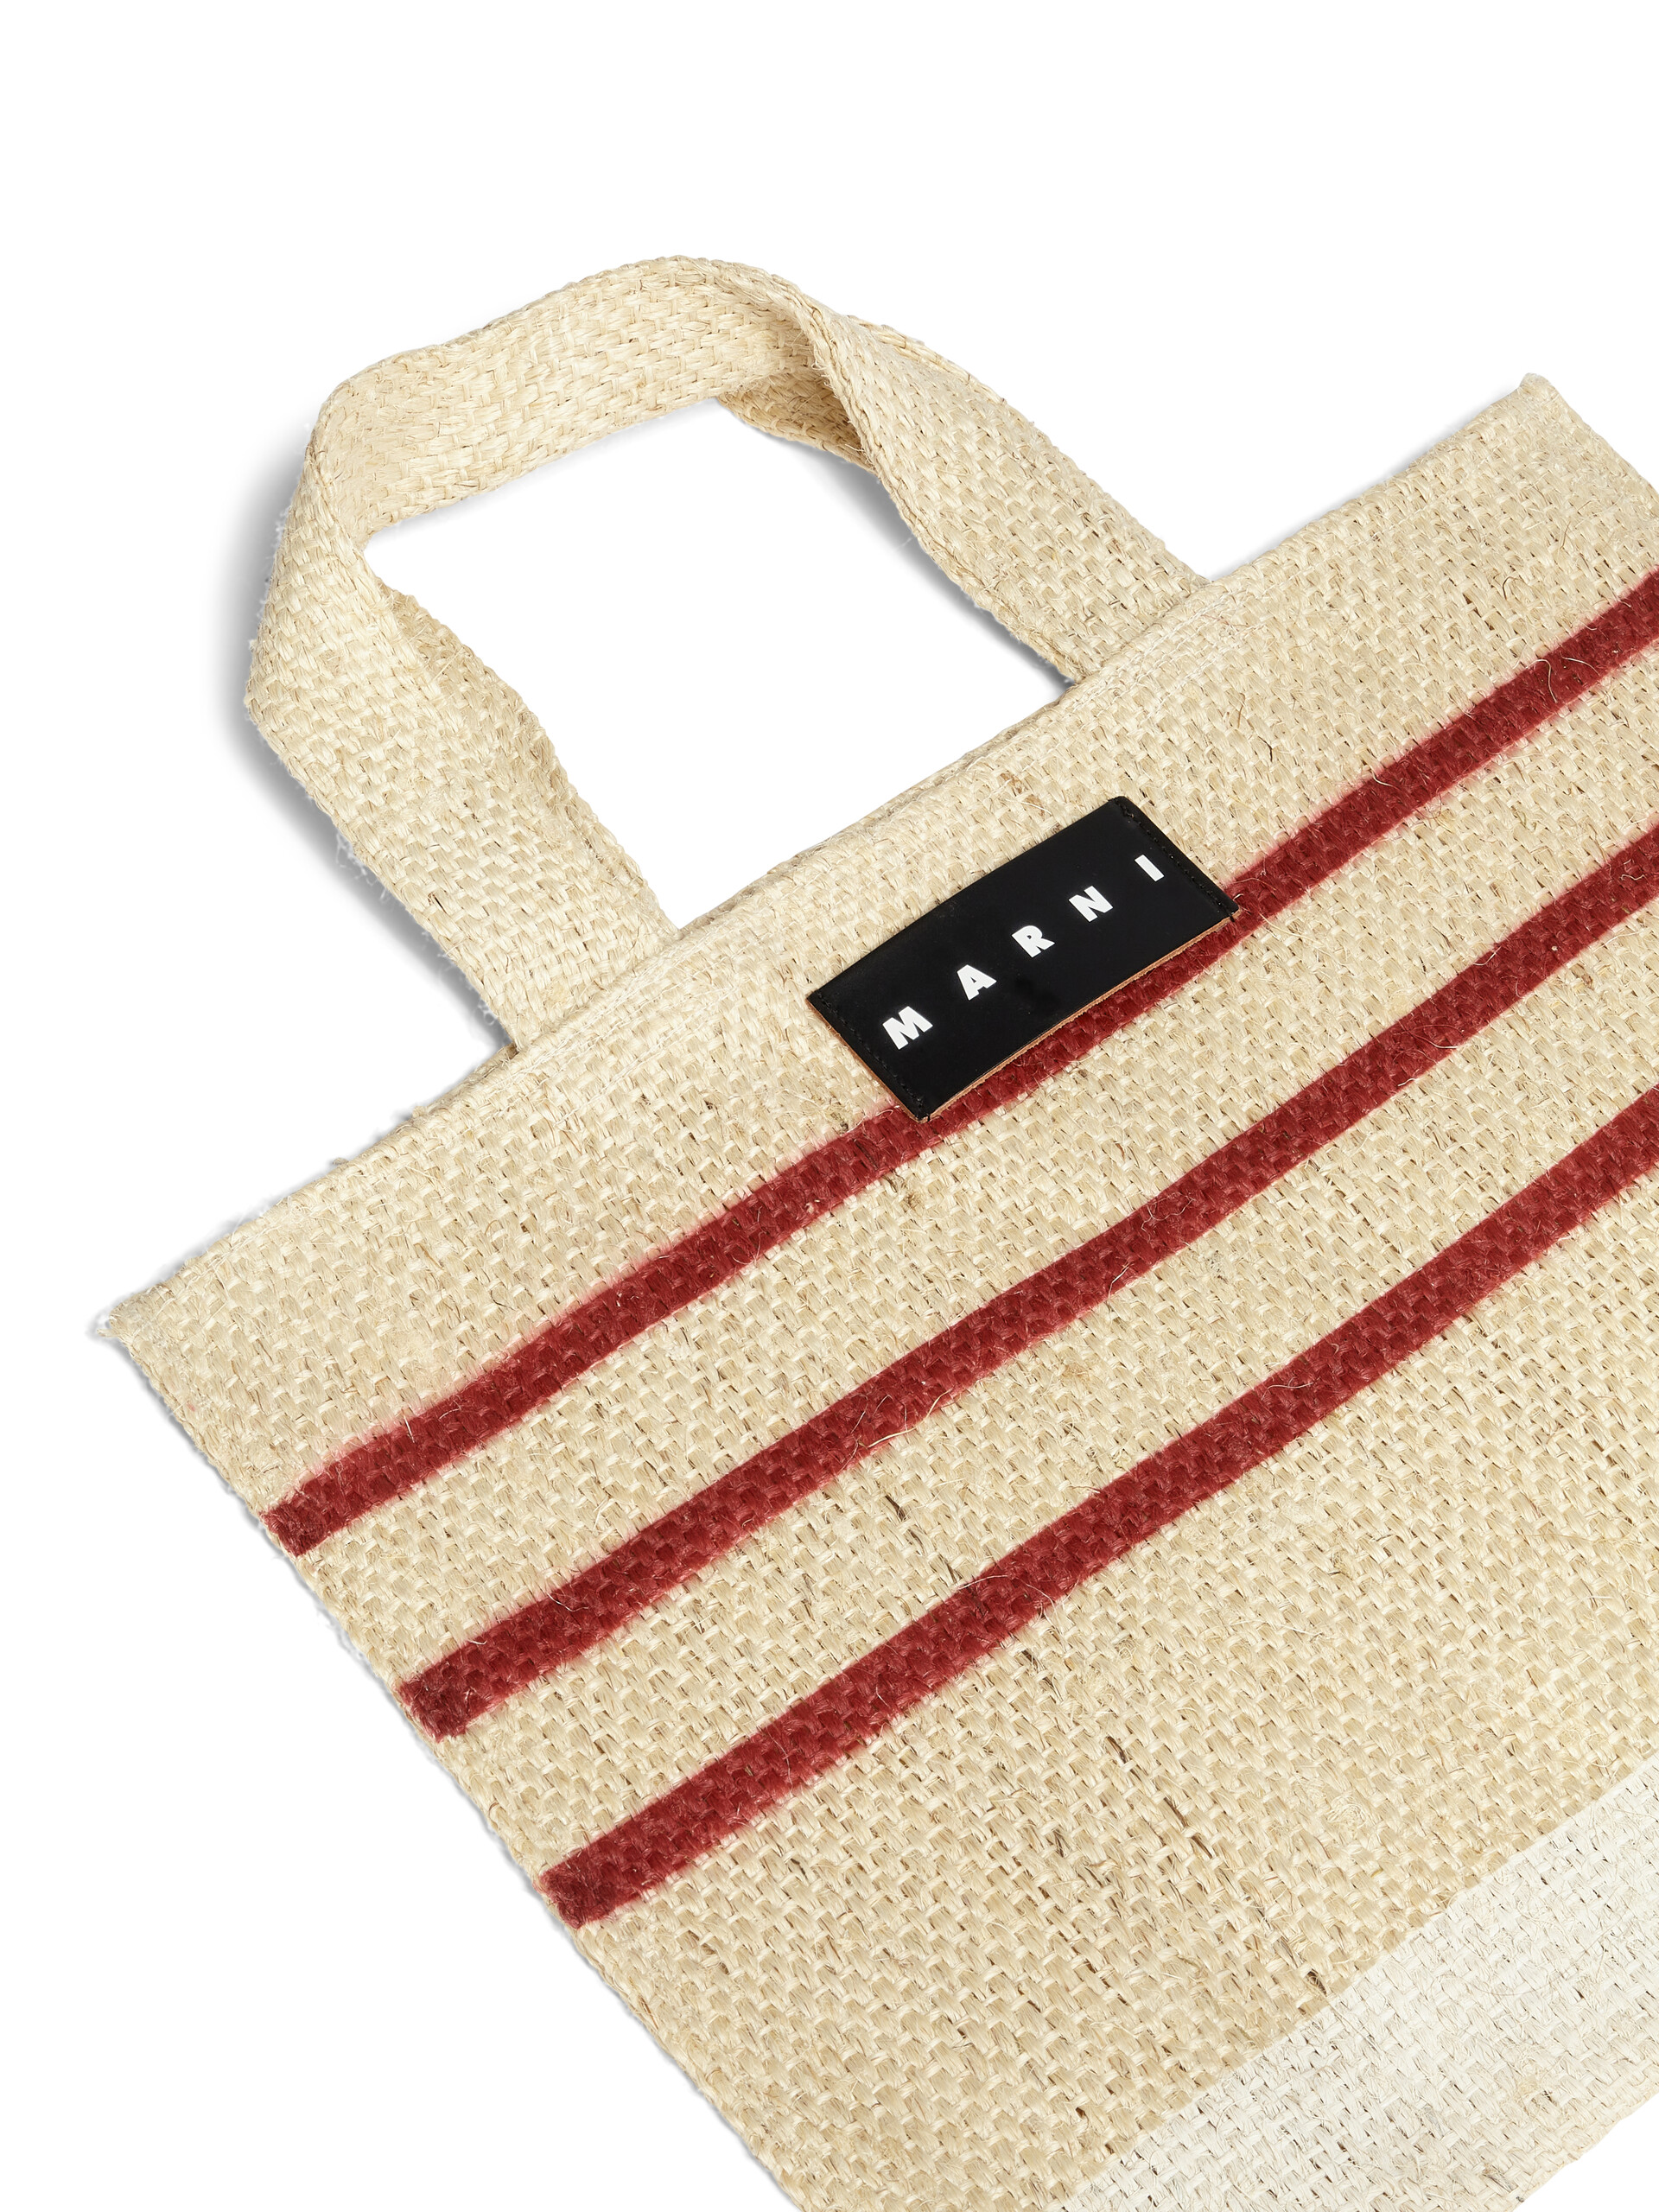 MARNI MARKET small bag in red natural fiber - Bags - Image 4